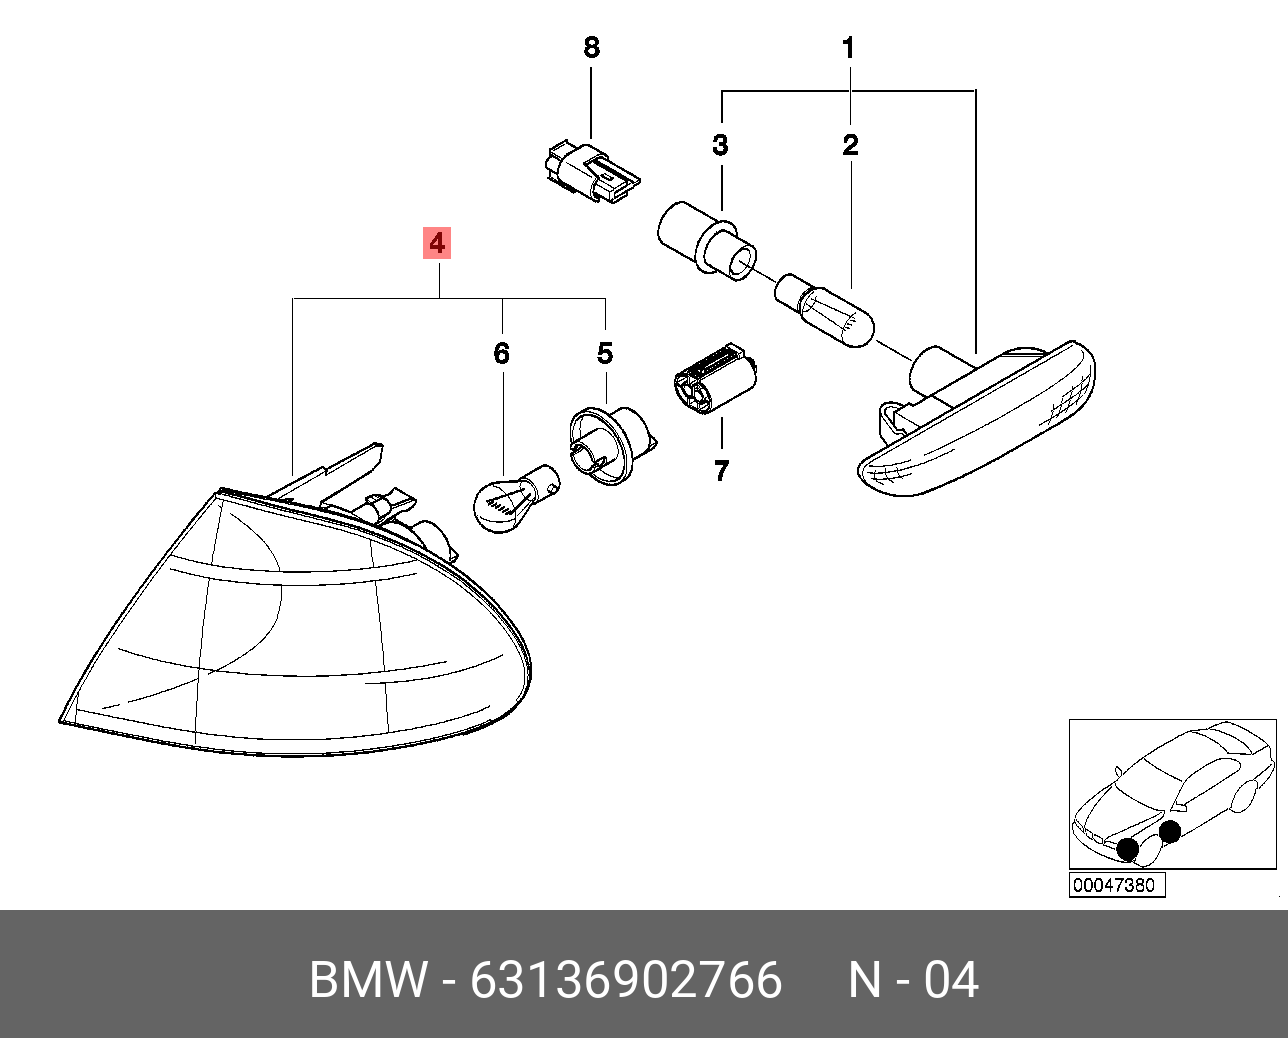 63 13 7. Указатель поворота BMW e46. BMW 63 21 7 160 900 лампа накаливания указателя поворота фары передней. БМВ 520 указатель поворота боковой. BMW 320i лампа указатель поворотника.